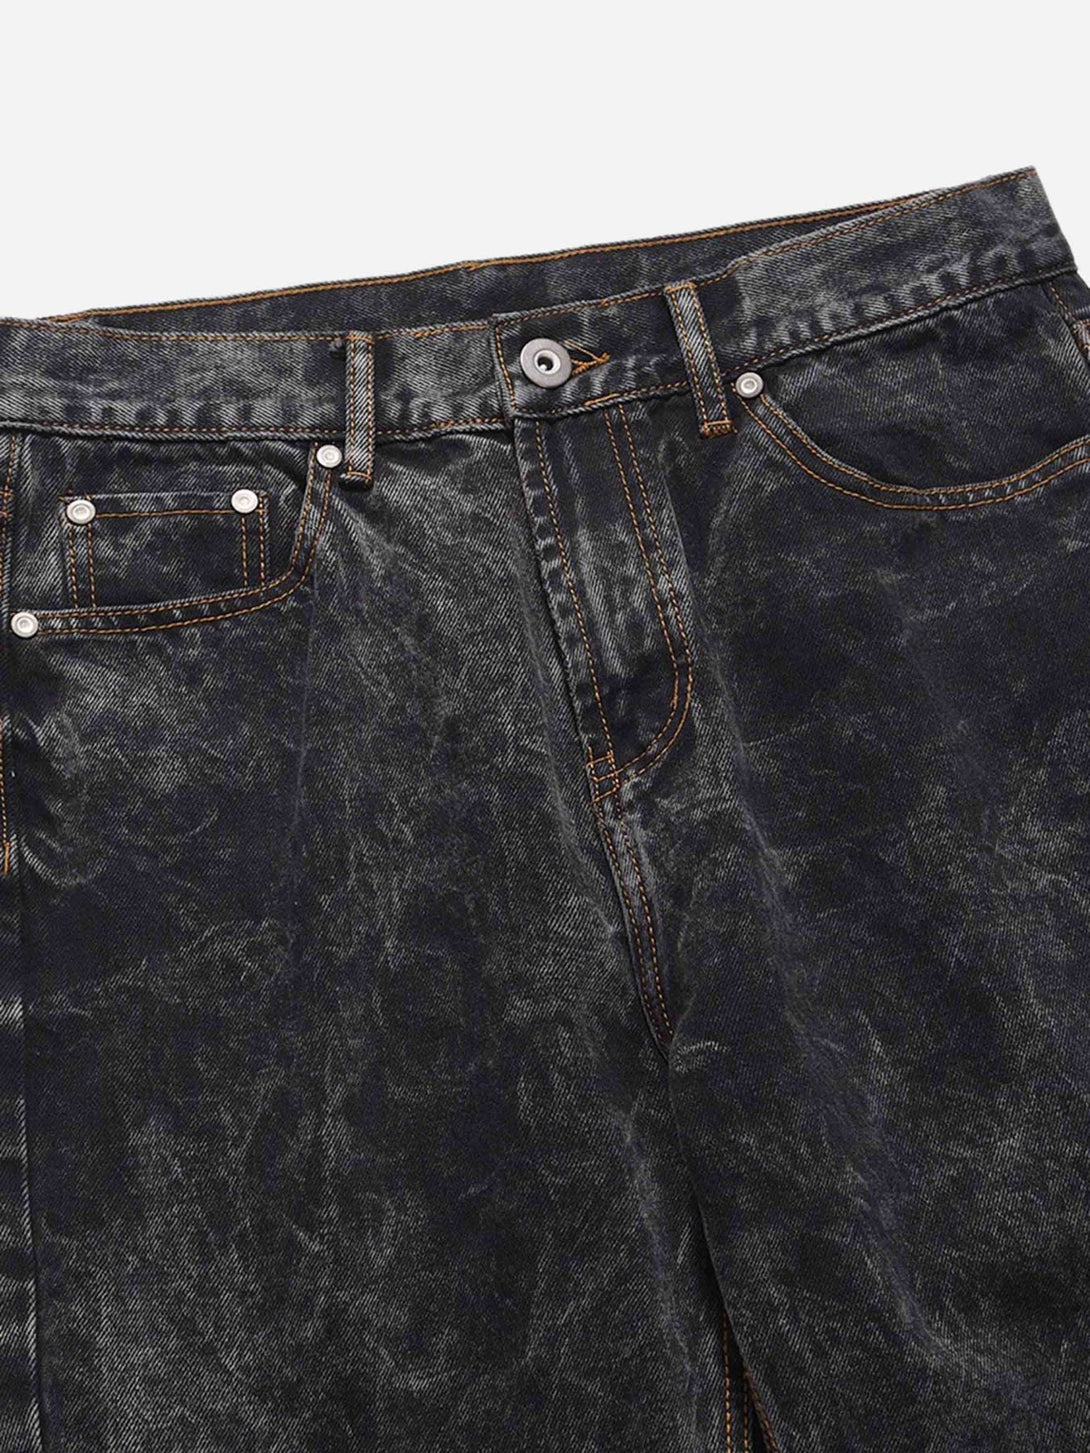 Majesda® - Acid wash Embroidery Stitching Two-tone Jeans - 1744- Outfit Ideas - Streetwear Fashion - majesda.com